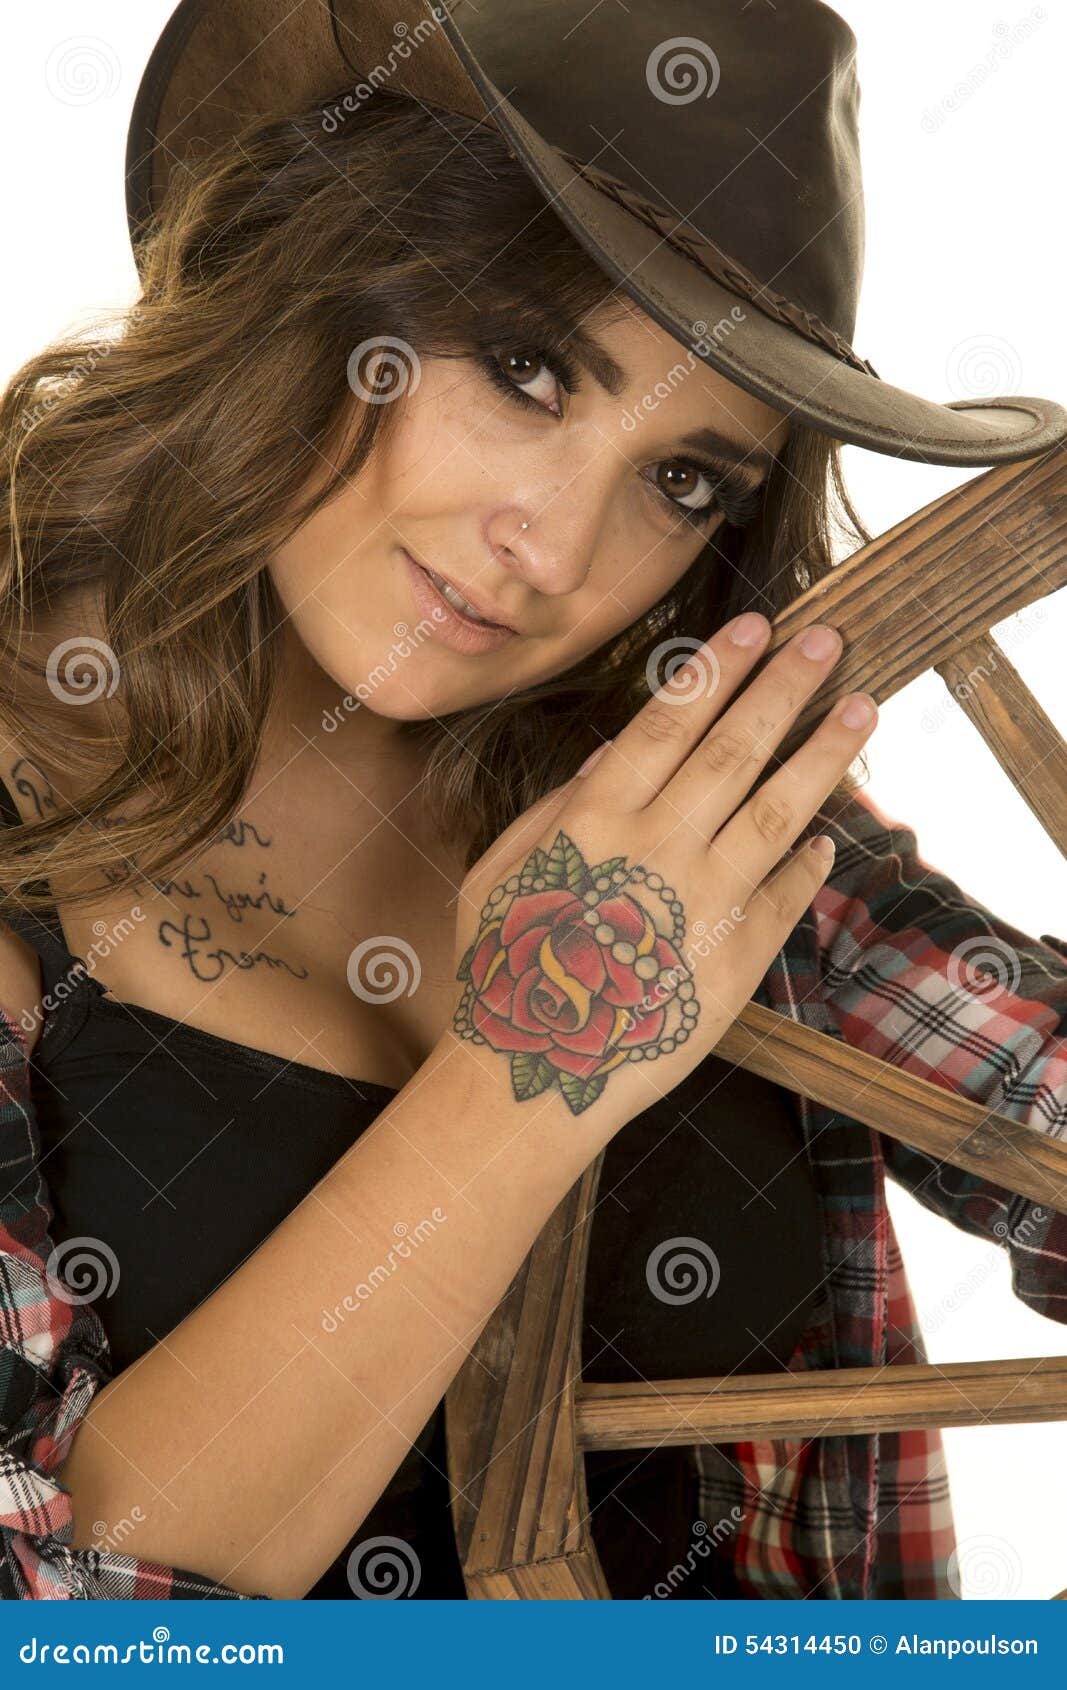 Country Girl Tattoo Designs  À Découvrir